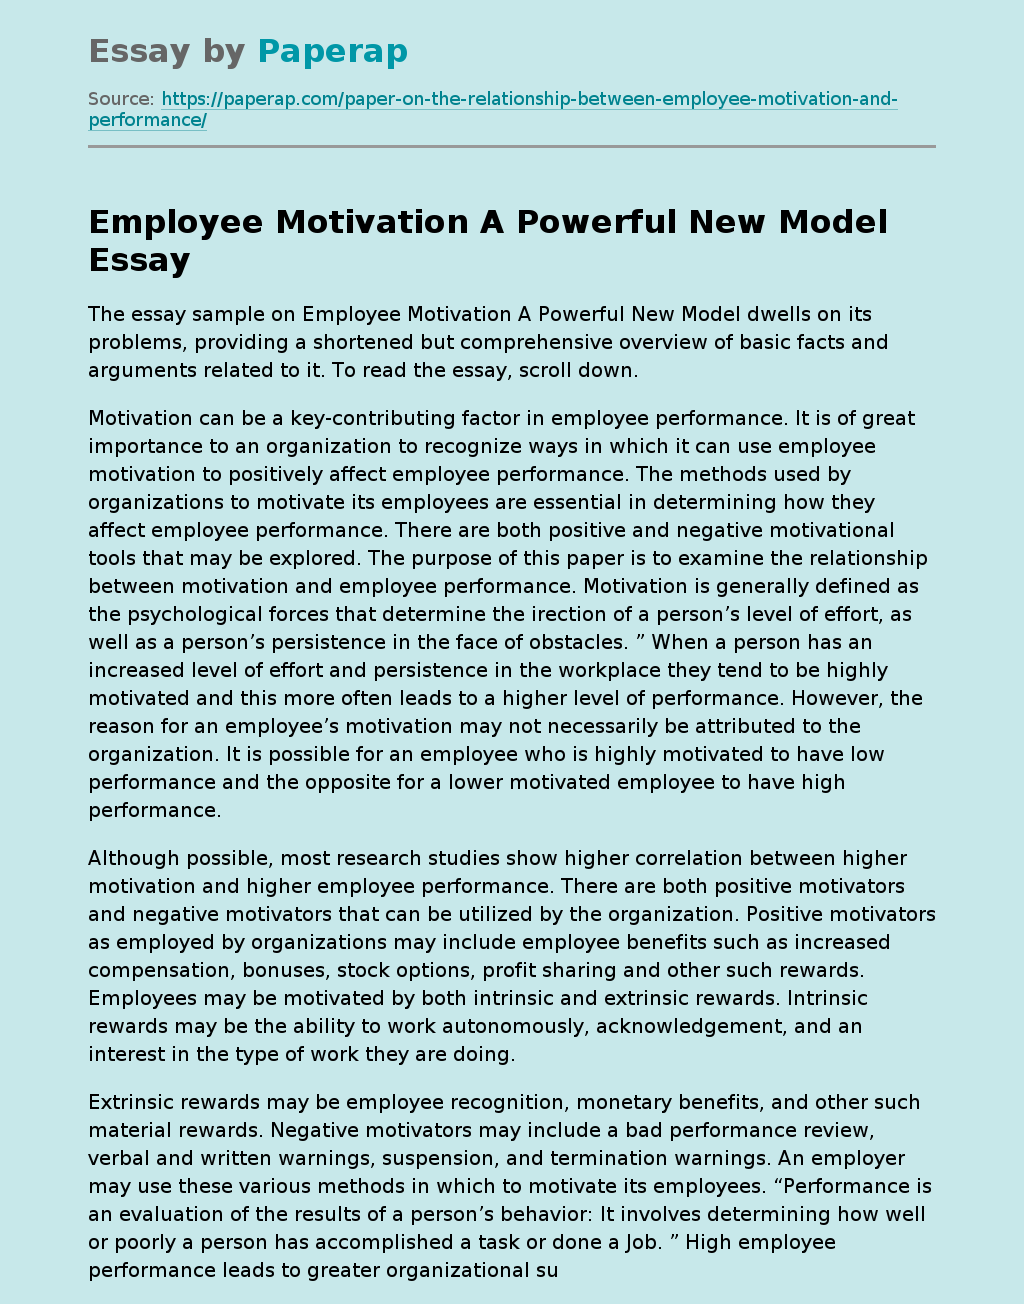 Employee Motivation A Powerful New Model